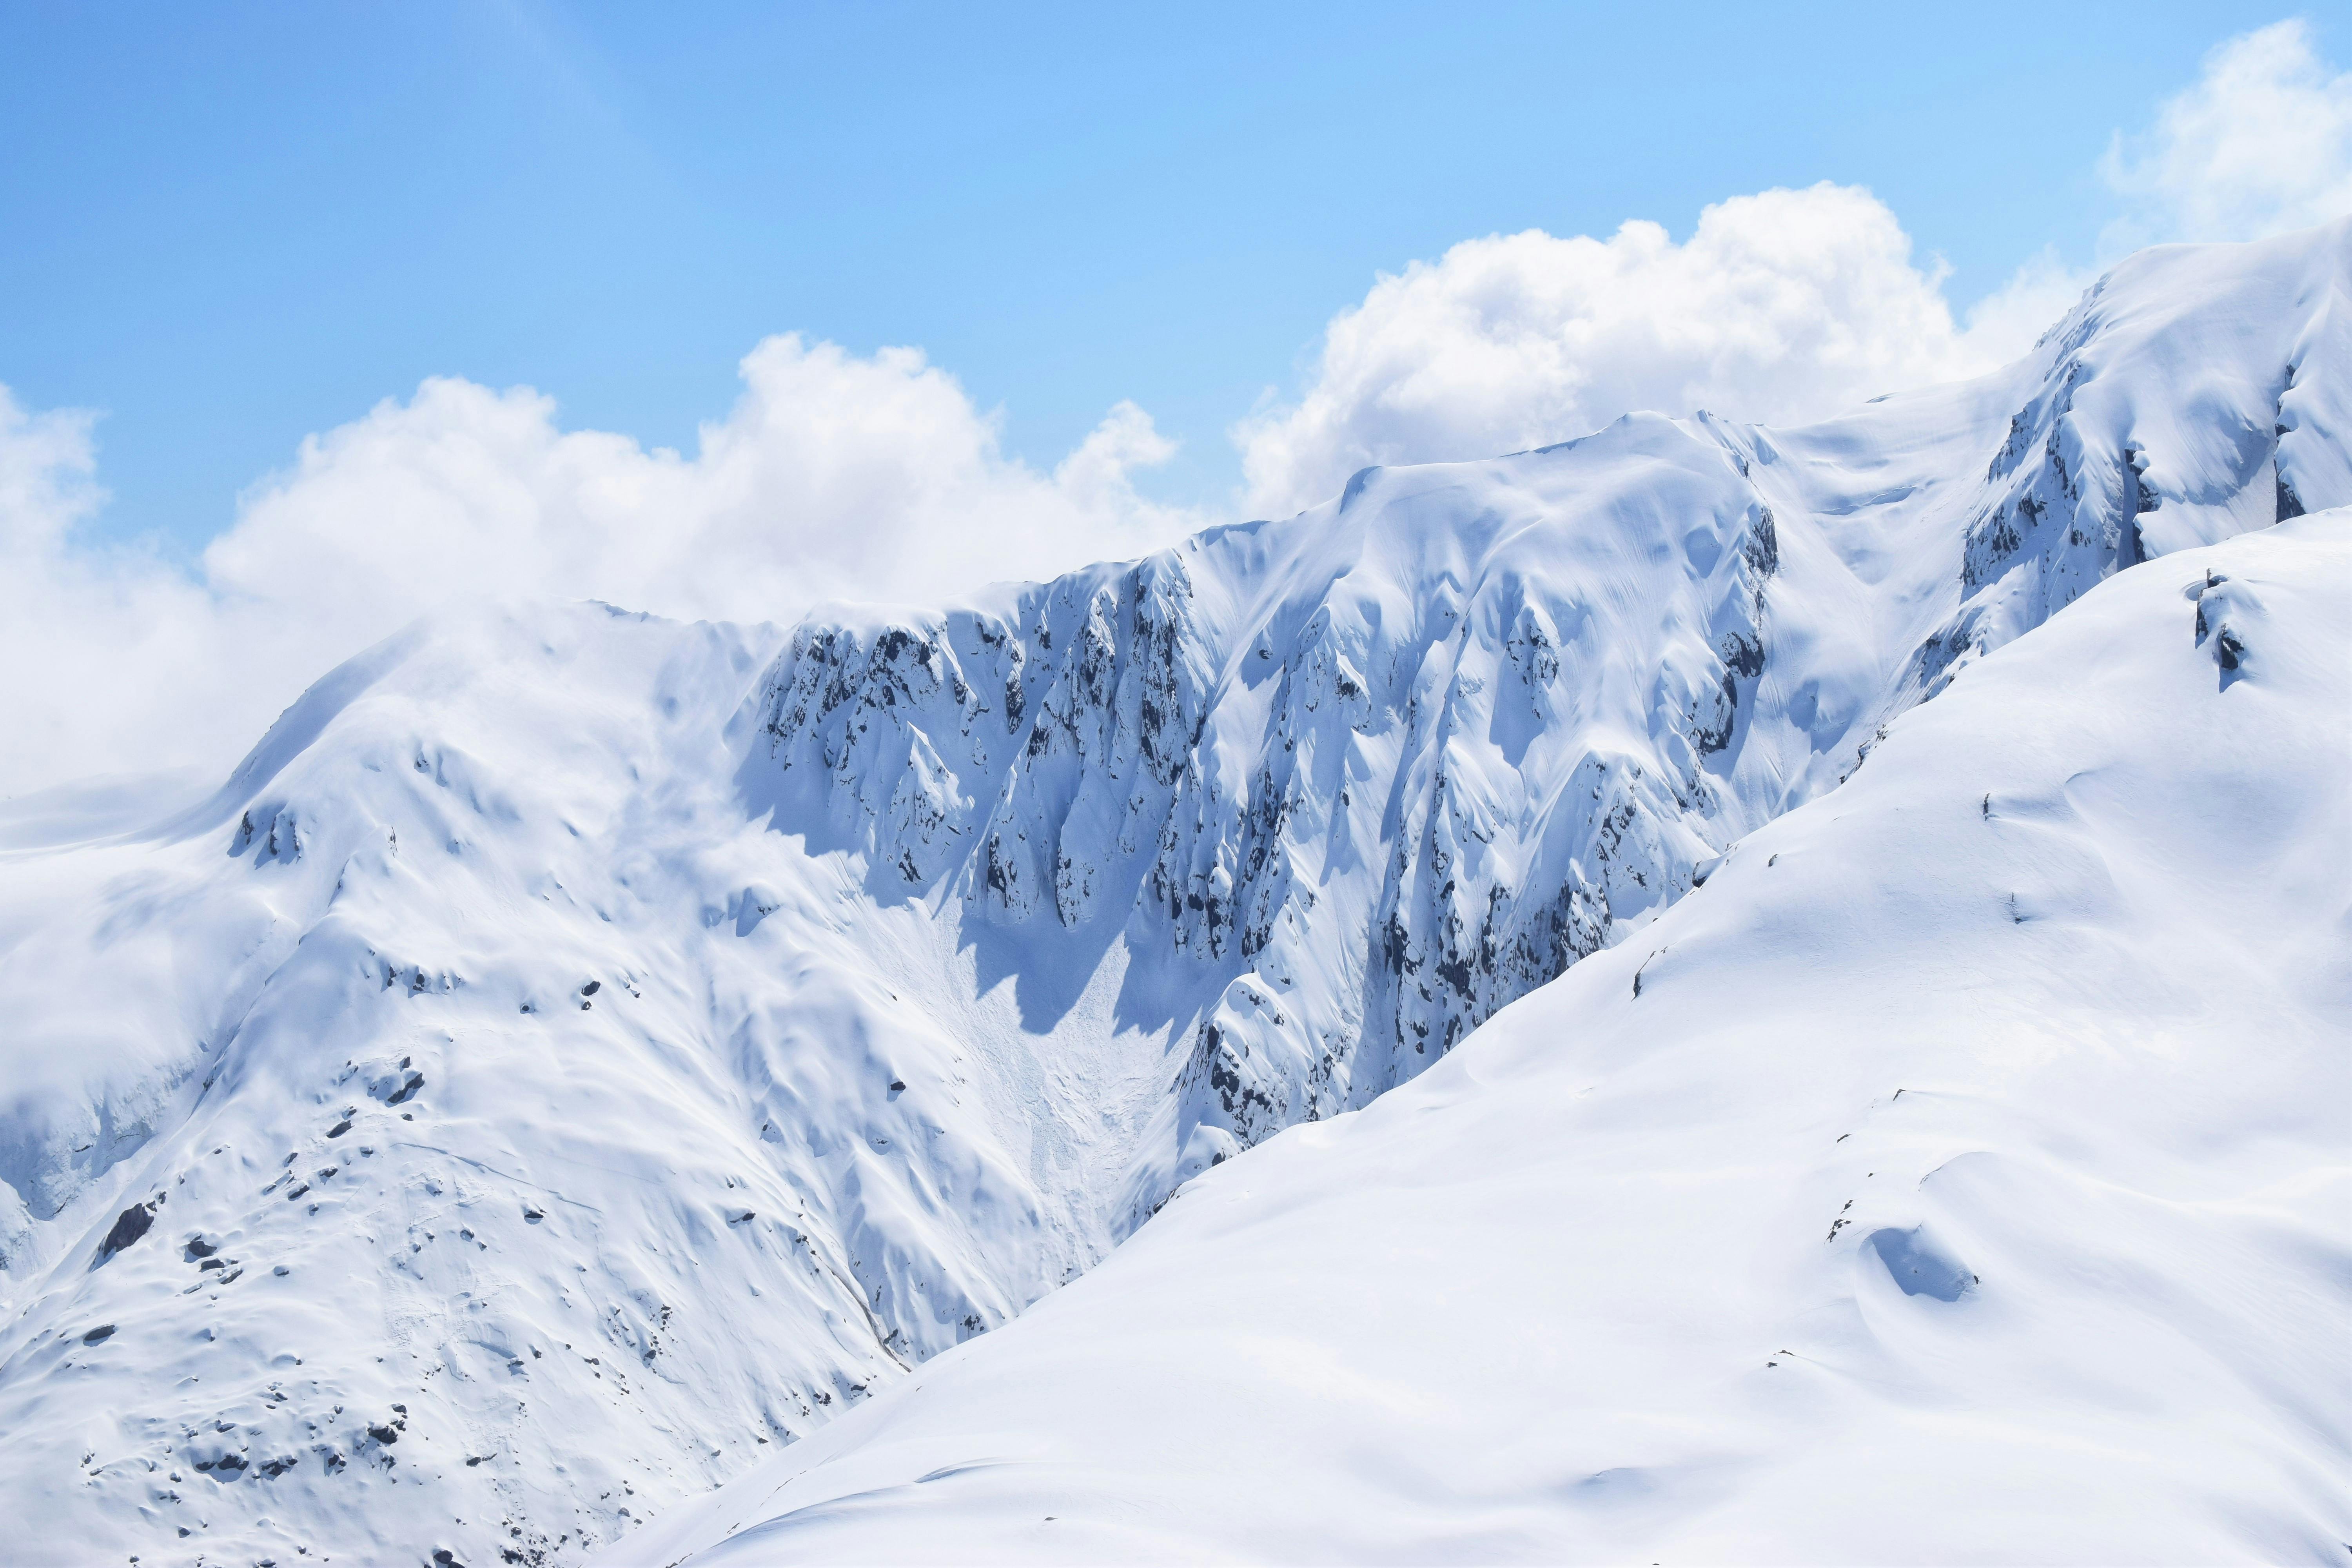 Snow Mountain iPhone Wallpaper  iDrop News